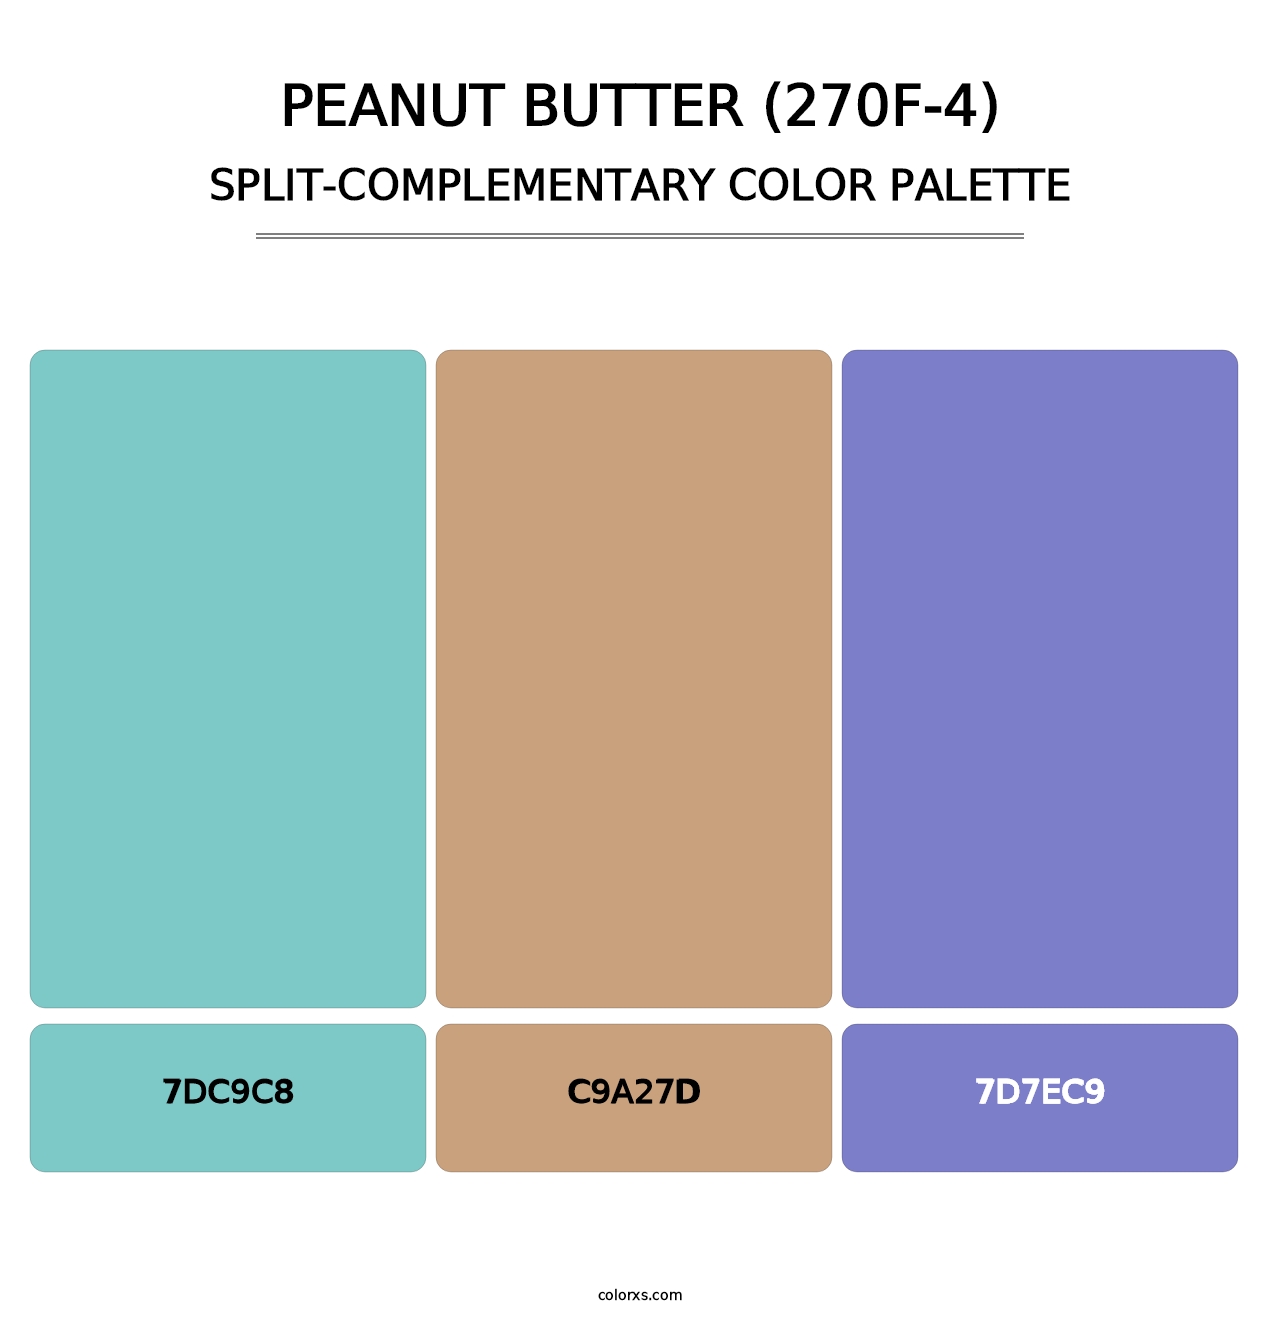 Peanut Butter (270F-4) - Split-Complementary Color Palette